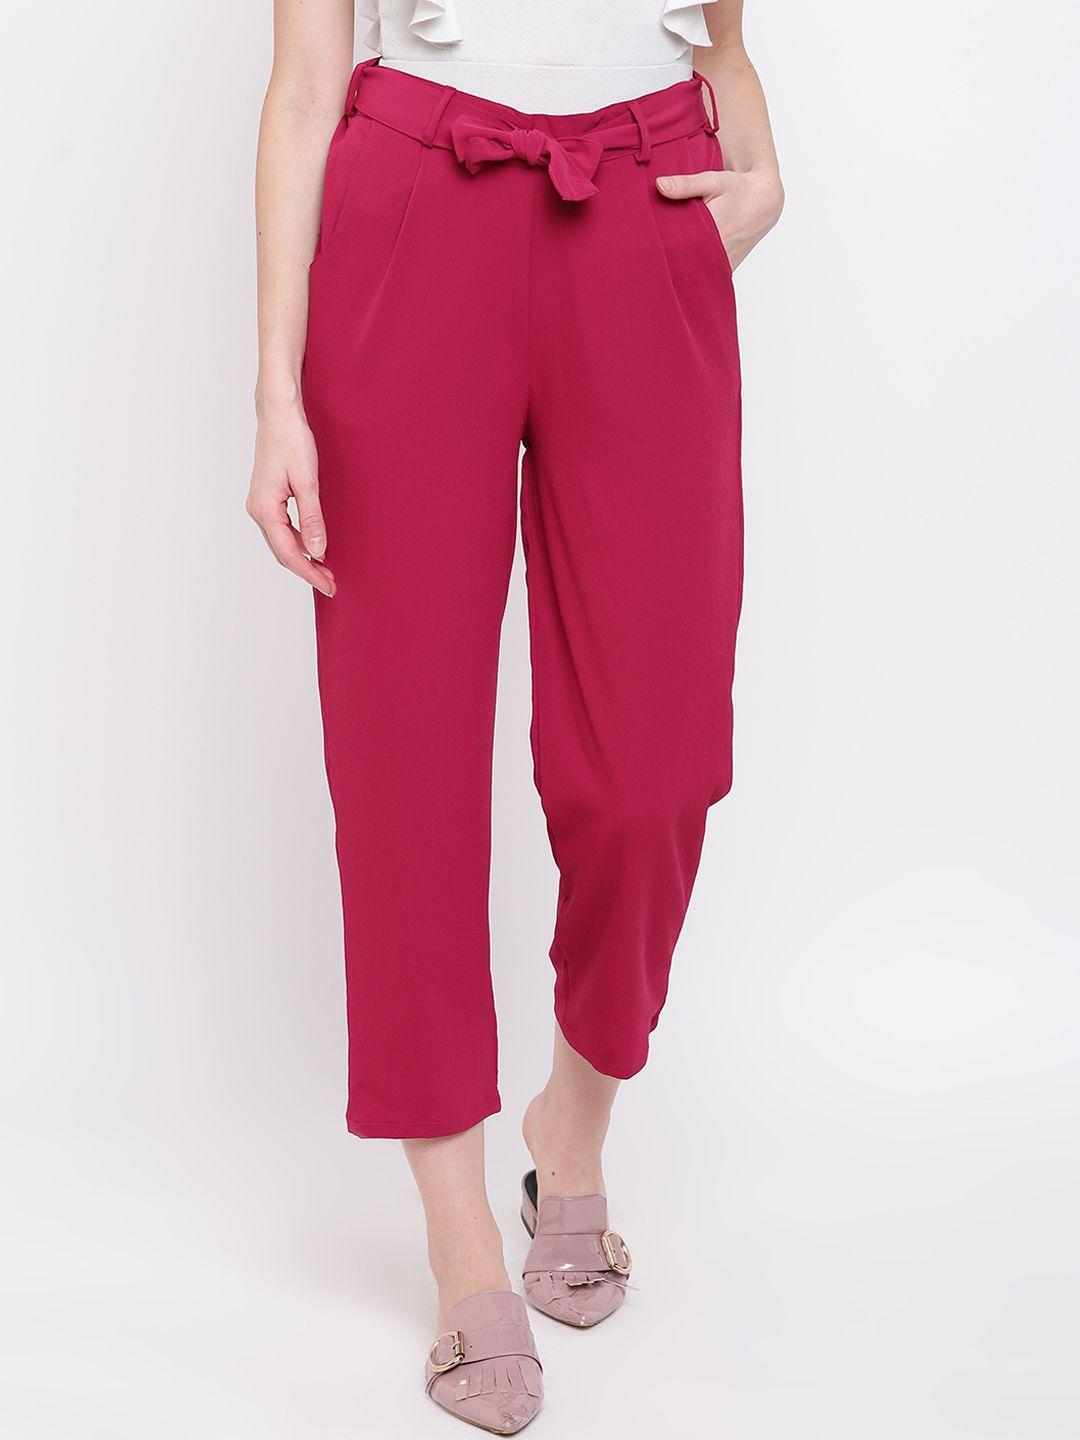 mayra women fuchsia pink regular fit solid peg trousers